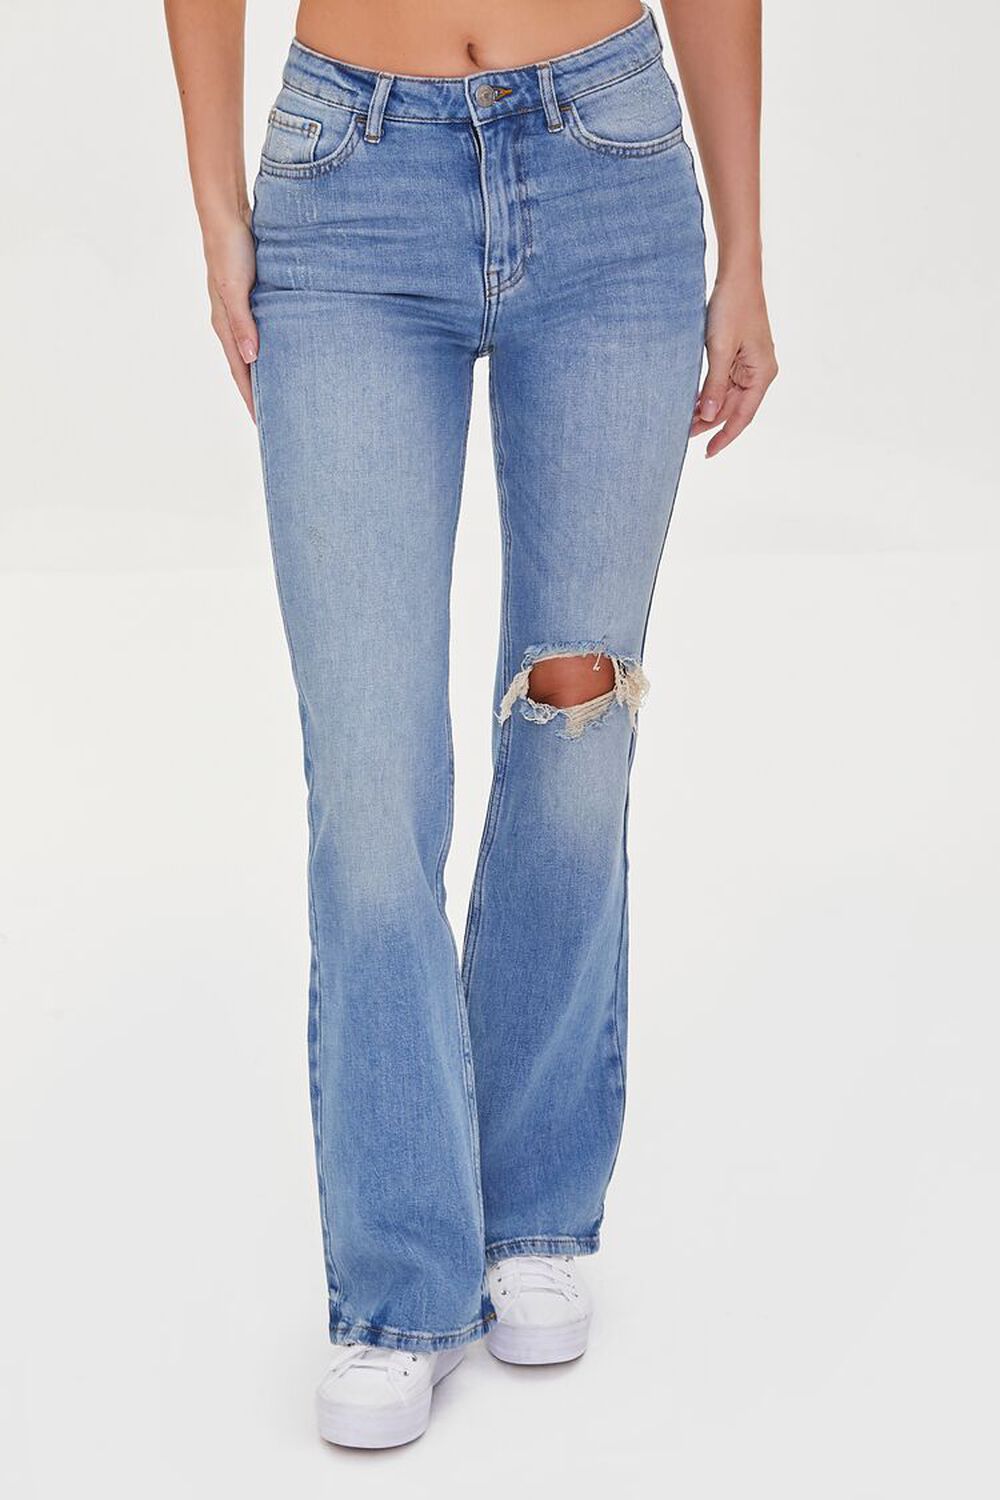 Hemp 4% High-Rise Flare Jeans, image 2